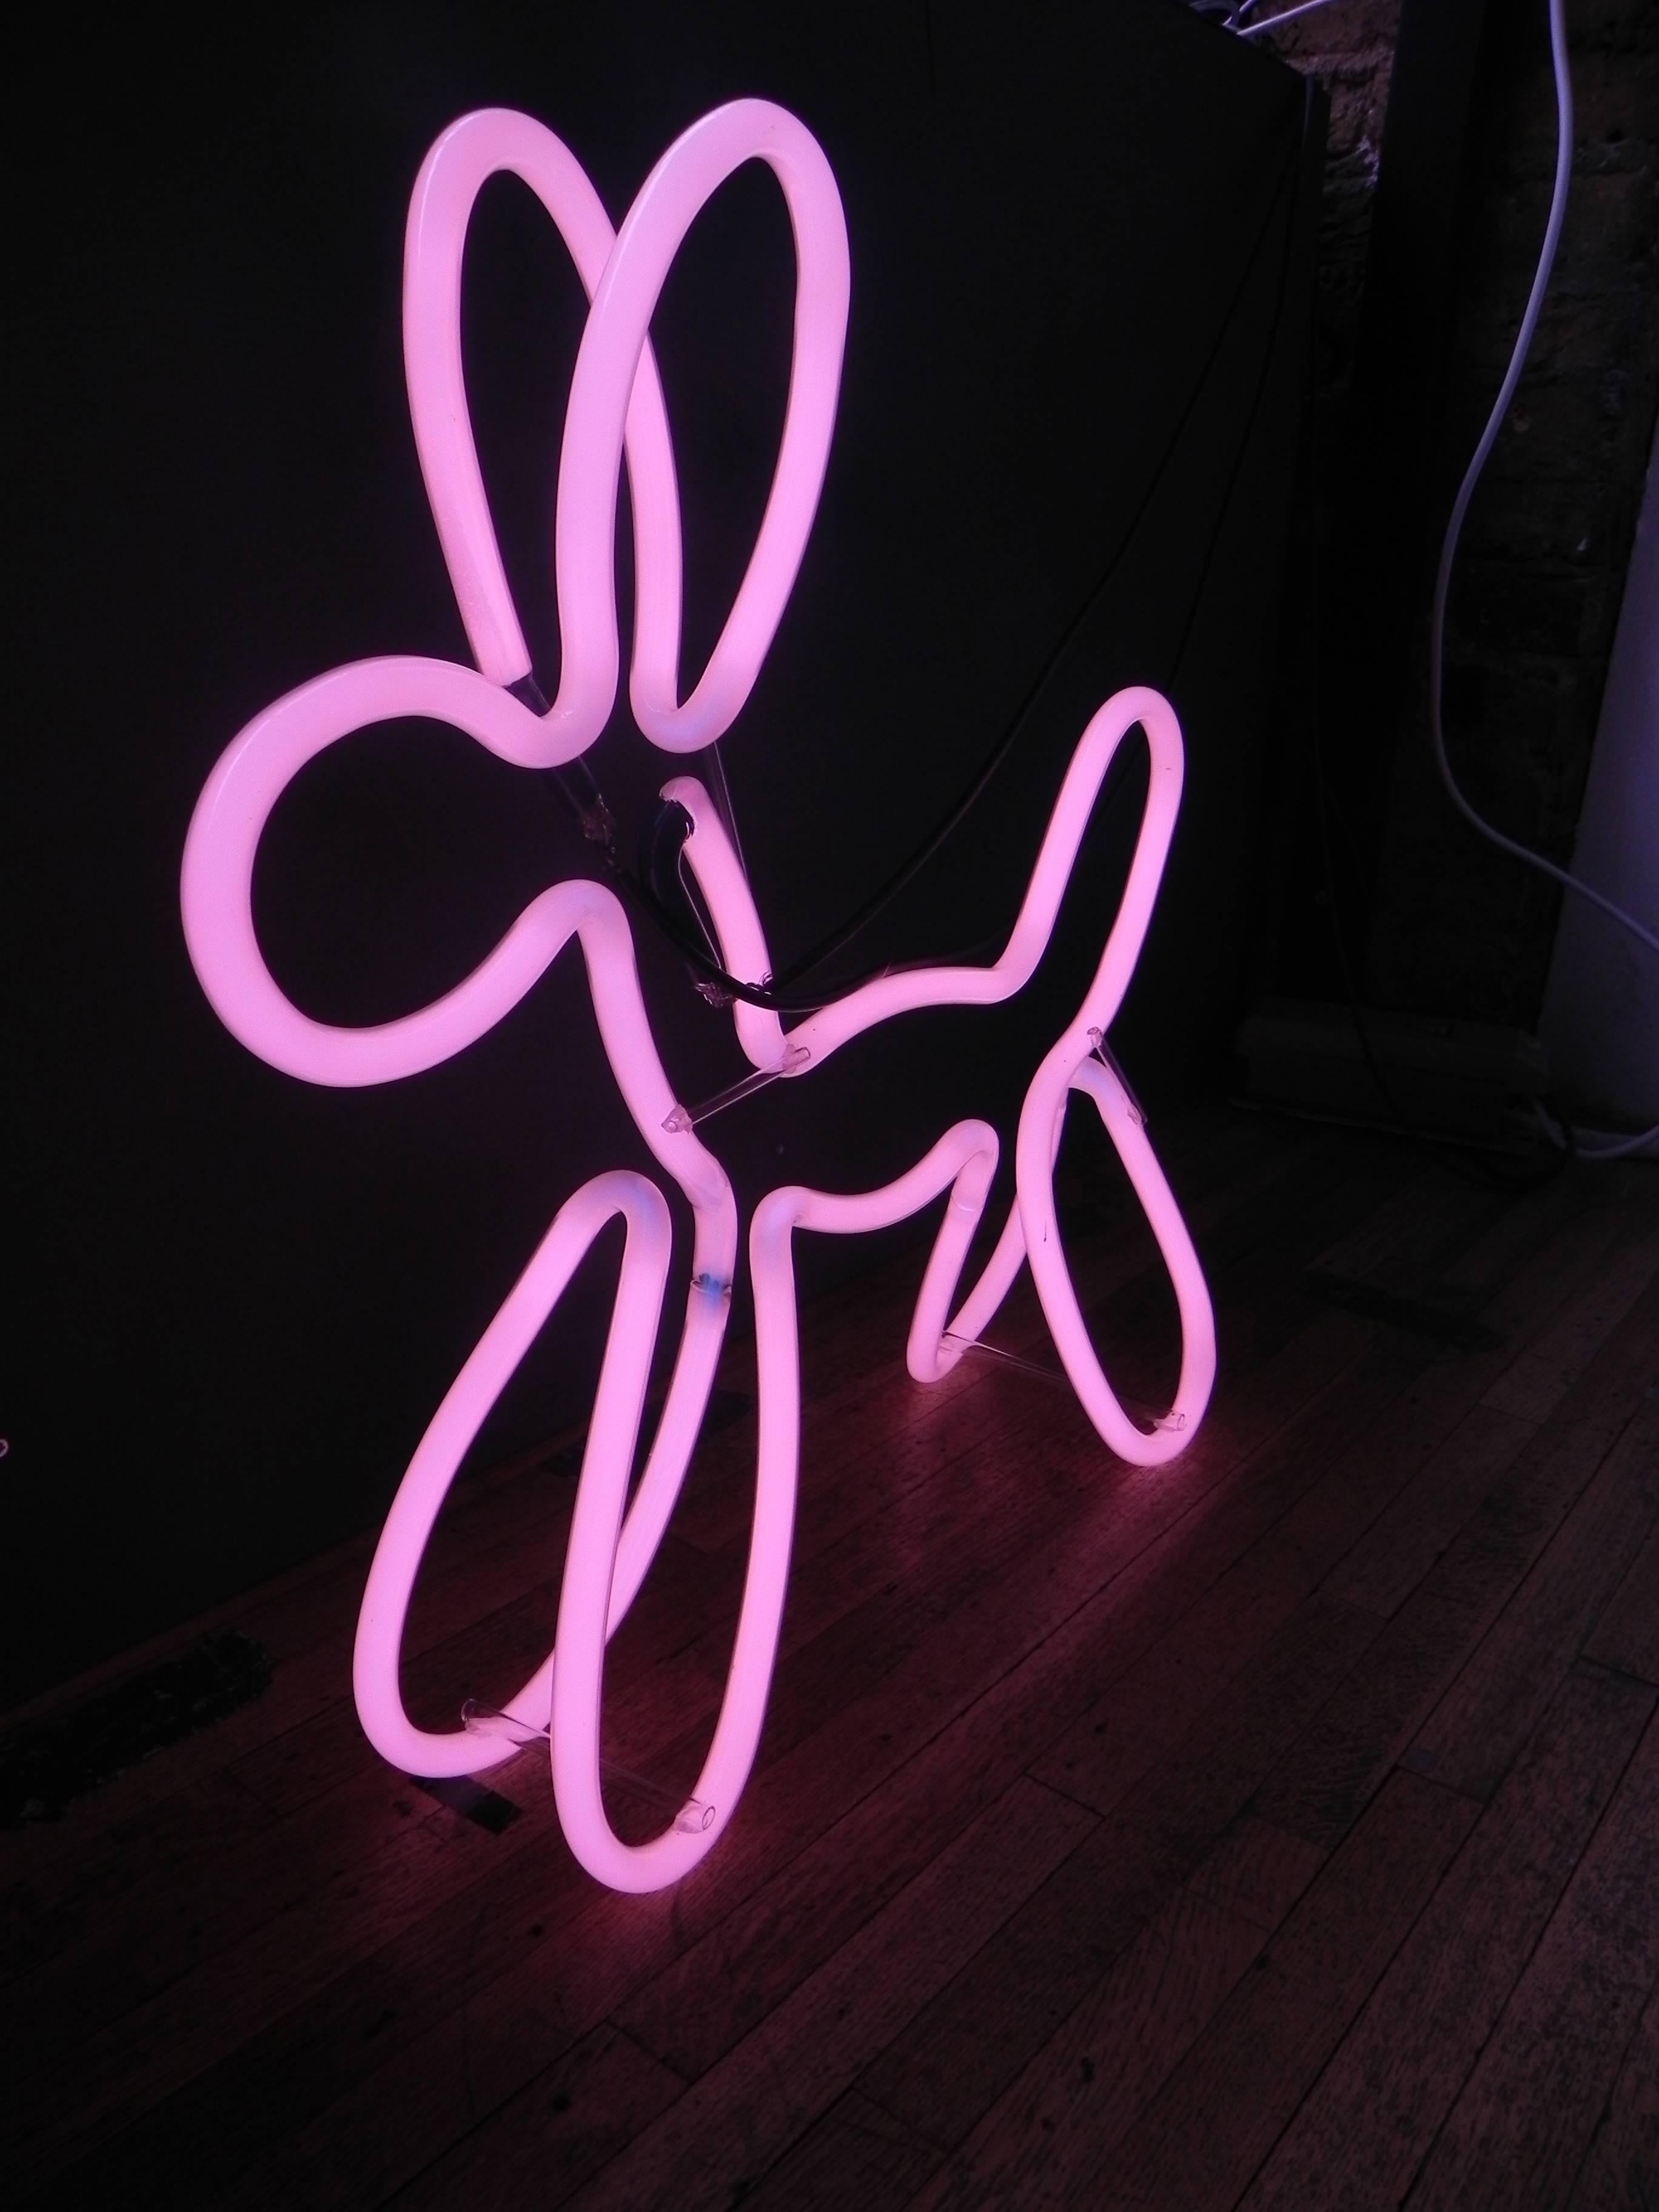 Lavender Neon Dog, 2015.
Deepa Mann-Kler.
Dimensions variable (Largest size 60 x 15 x 60 cm).
Unique 1/1.
£2000 inc Vat. 

As seen in the London Lumiere Festival 2016, Deepa Mann-Klerr's Series of 12 uniquely colored Neon Dogs, are now